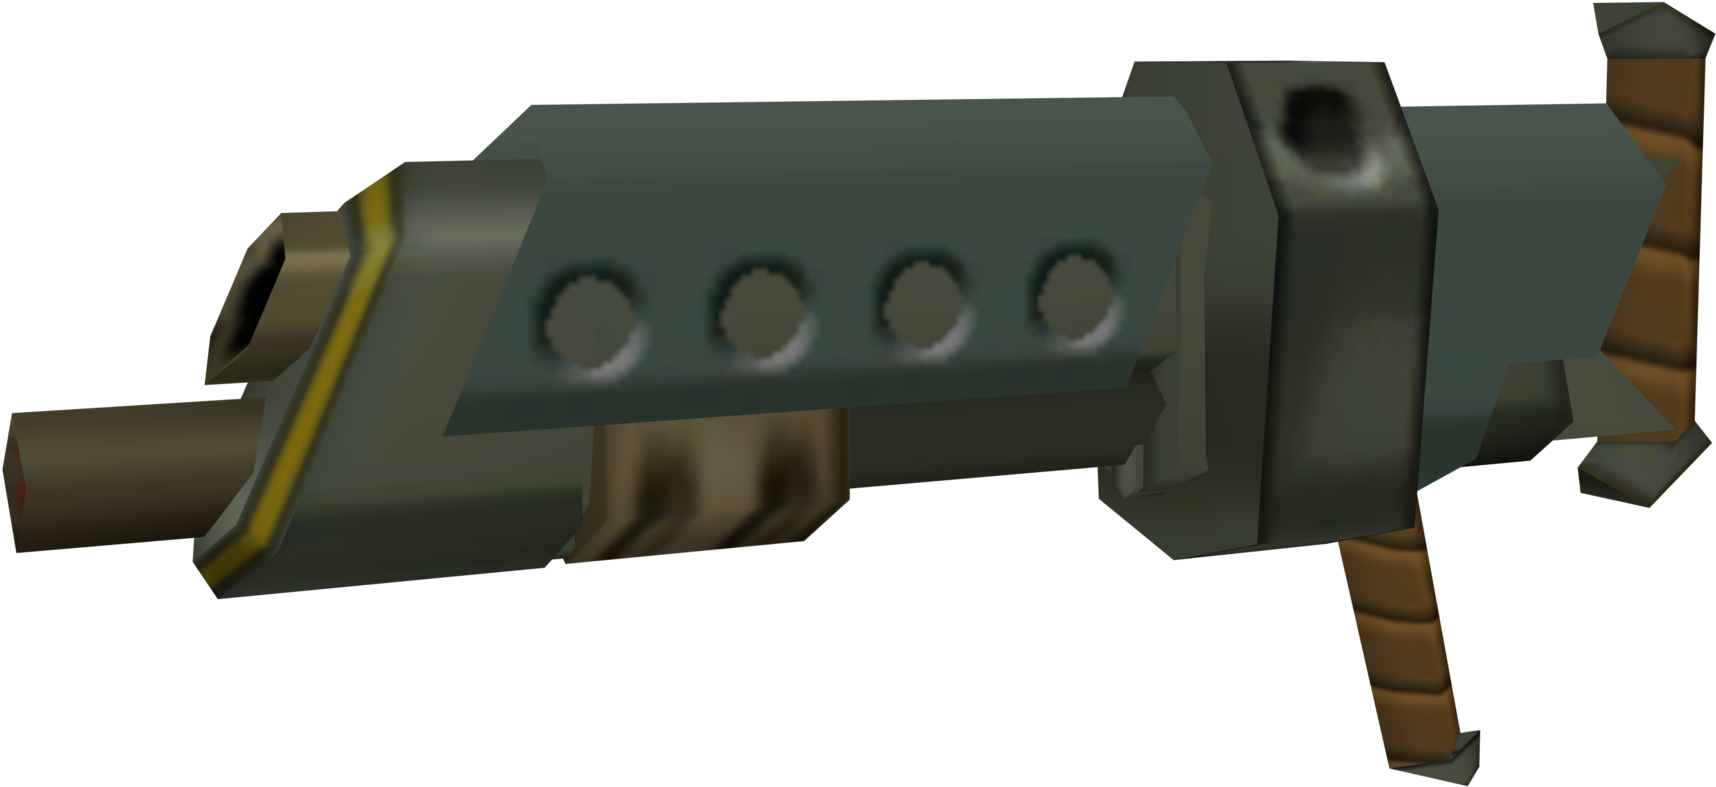 3 D Rendered Gun Model PNG